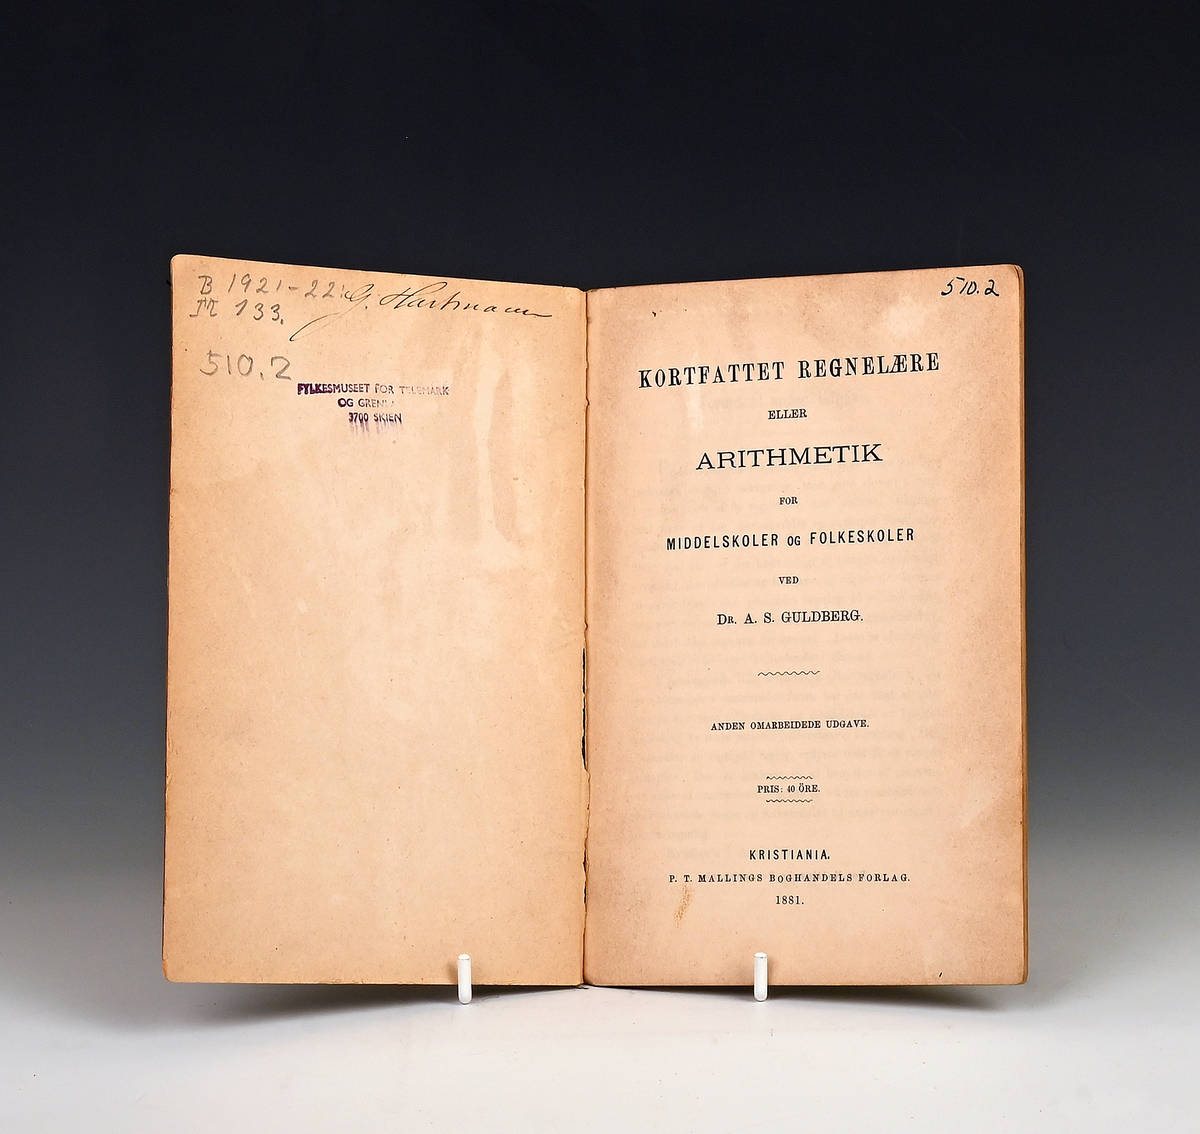 Prot: Guldberg, Dr. A. S., Kortfattet Regnelære eller Arithmetik. Kristiania 1881, 48 s.